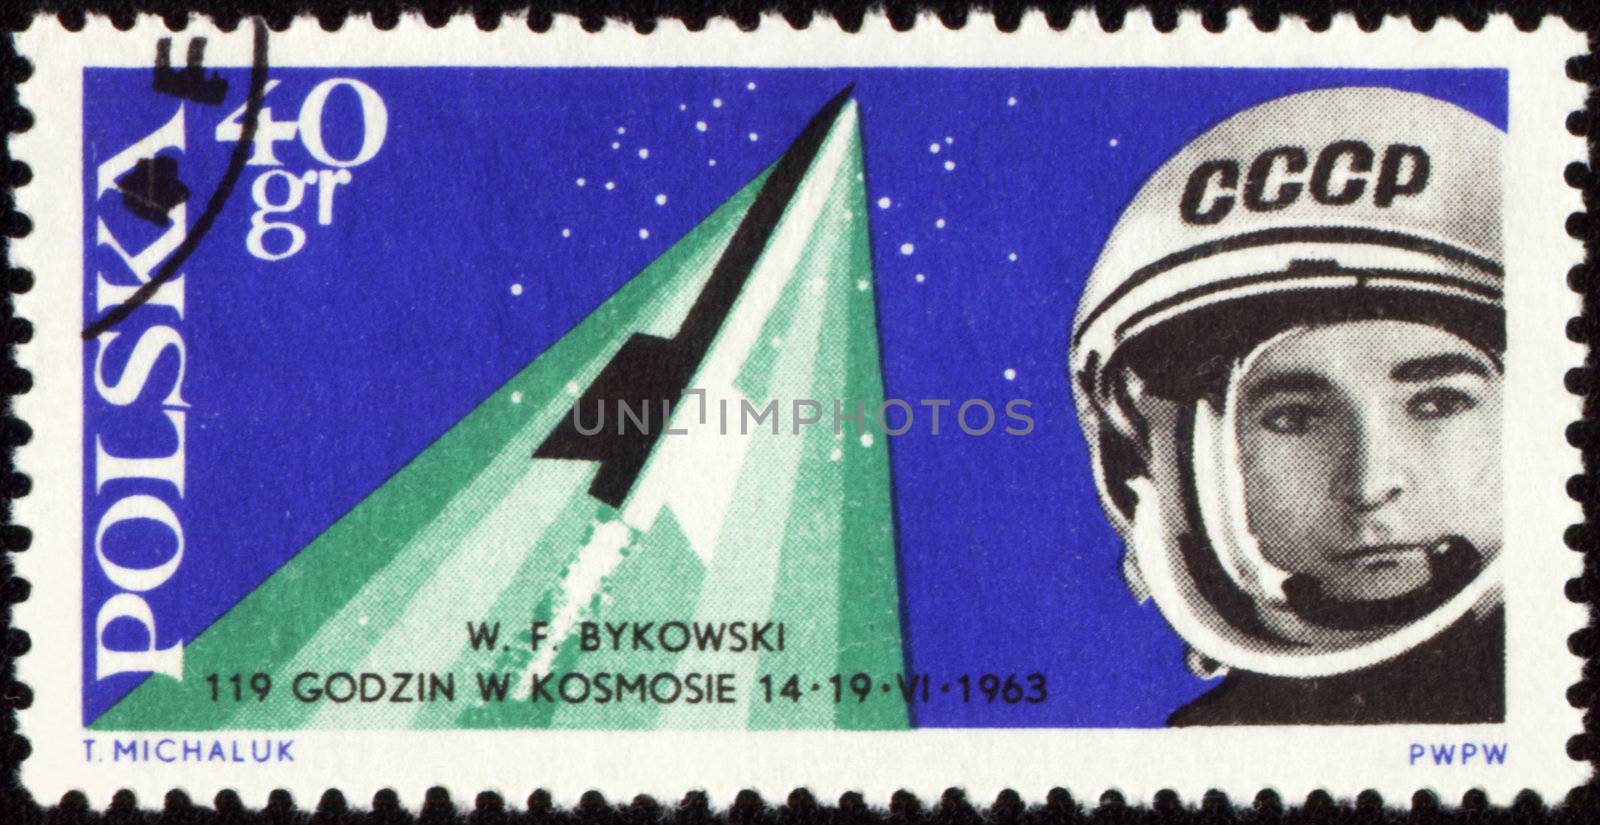 Postage stamp with soviet spaceship Vostok-5 and cosmonaut Valery Bykovsky by wander